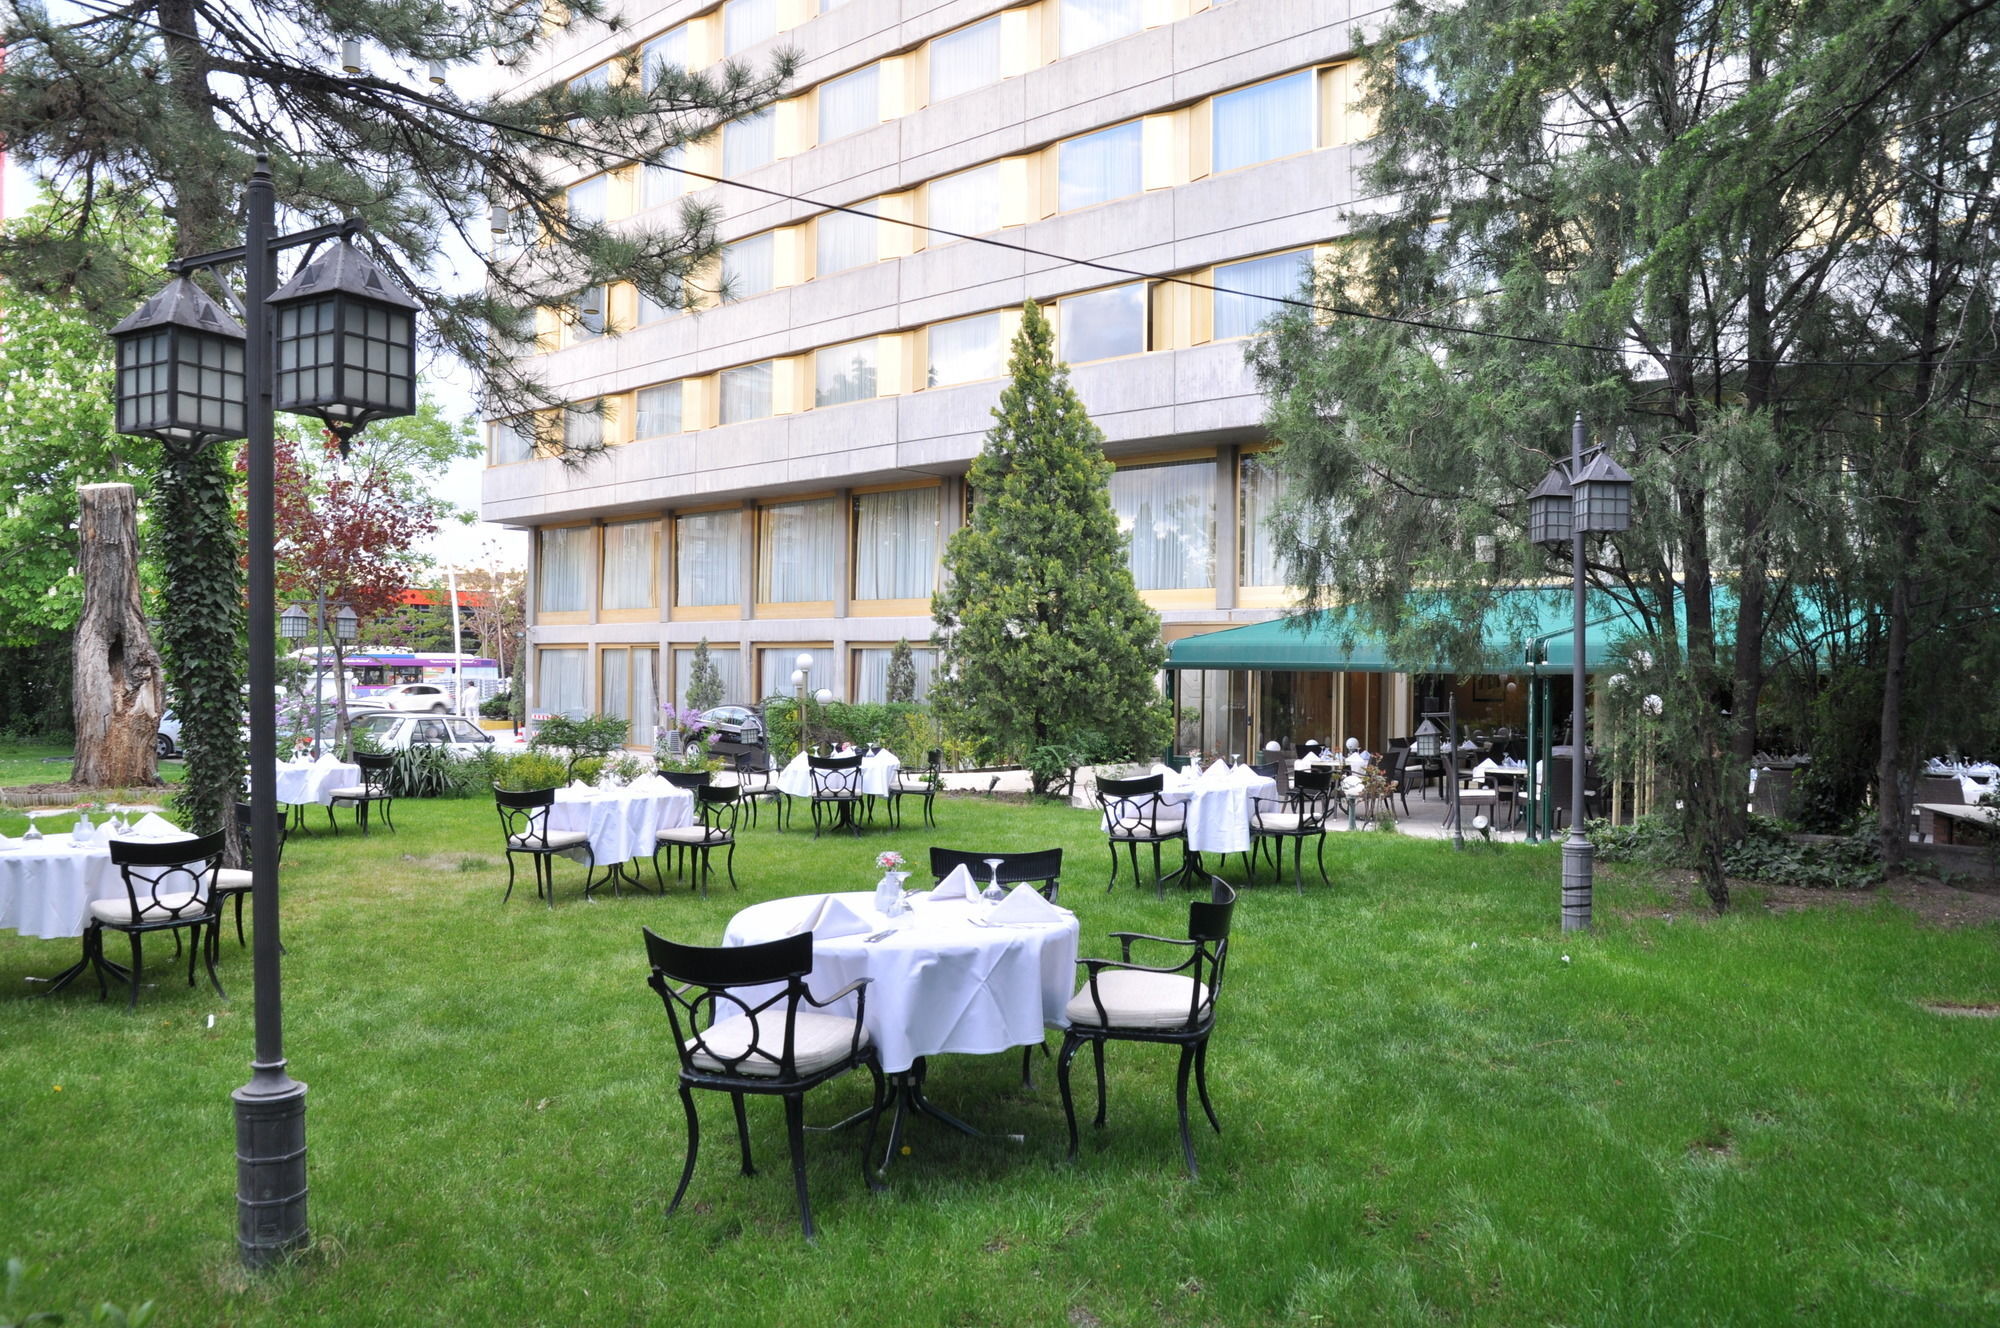 Altinel Ankara Hotel & Convention Center Exterior photo